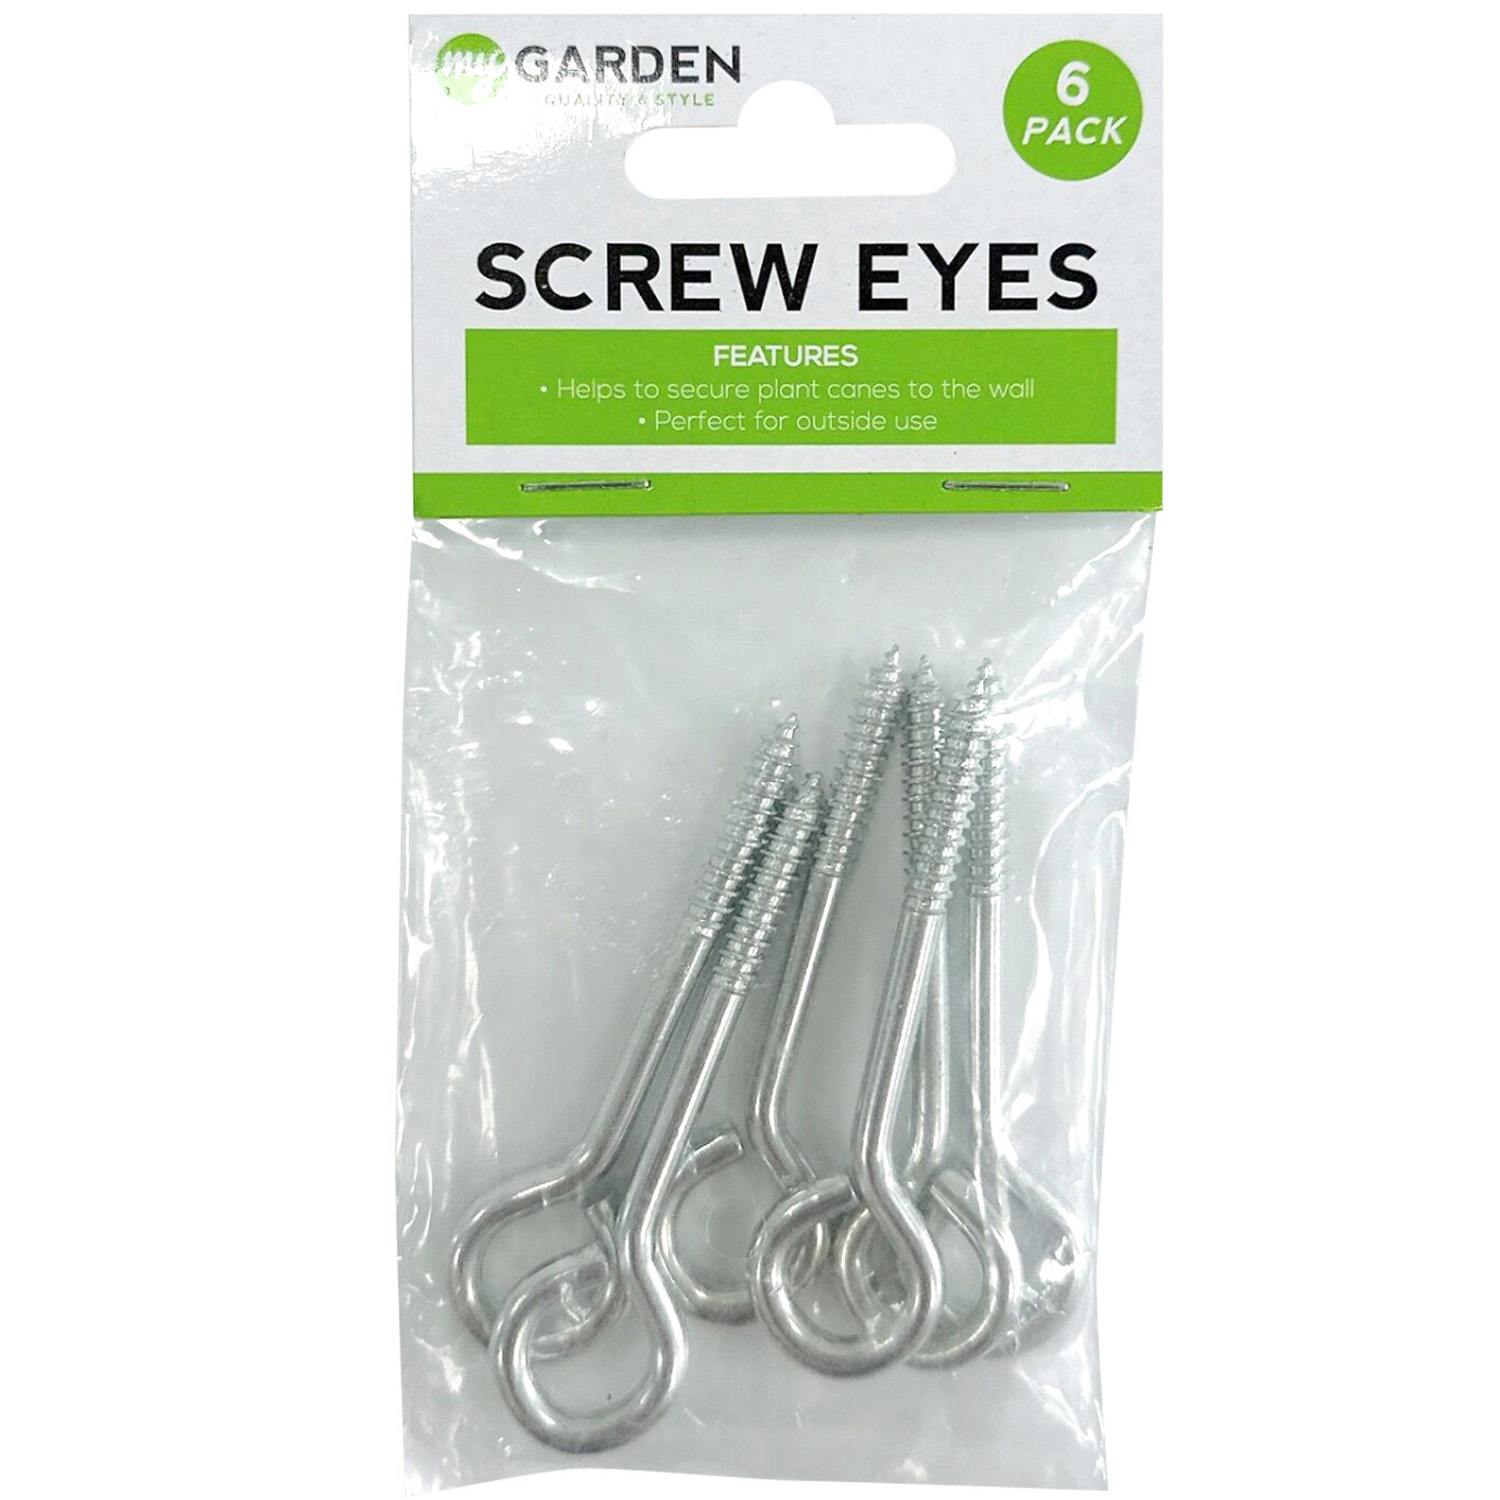 My Garden Silver Screw Eyes 6 Pack Image